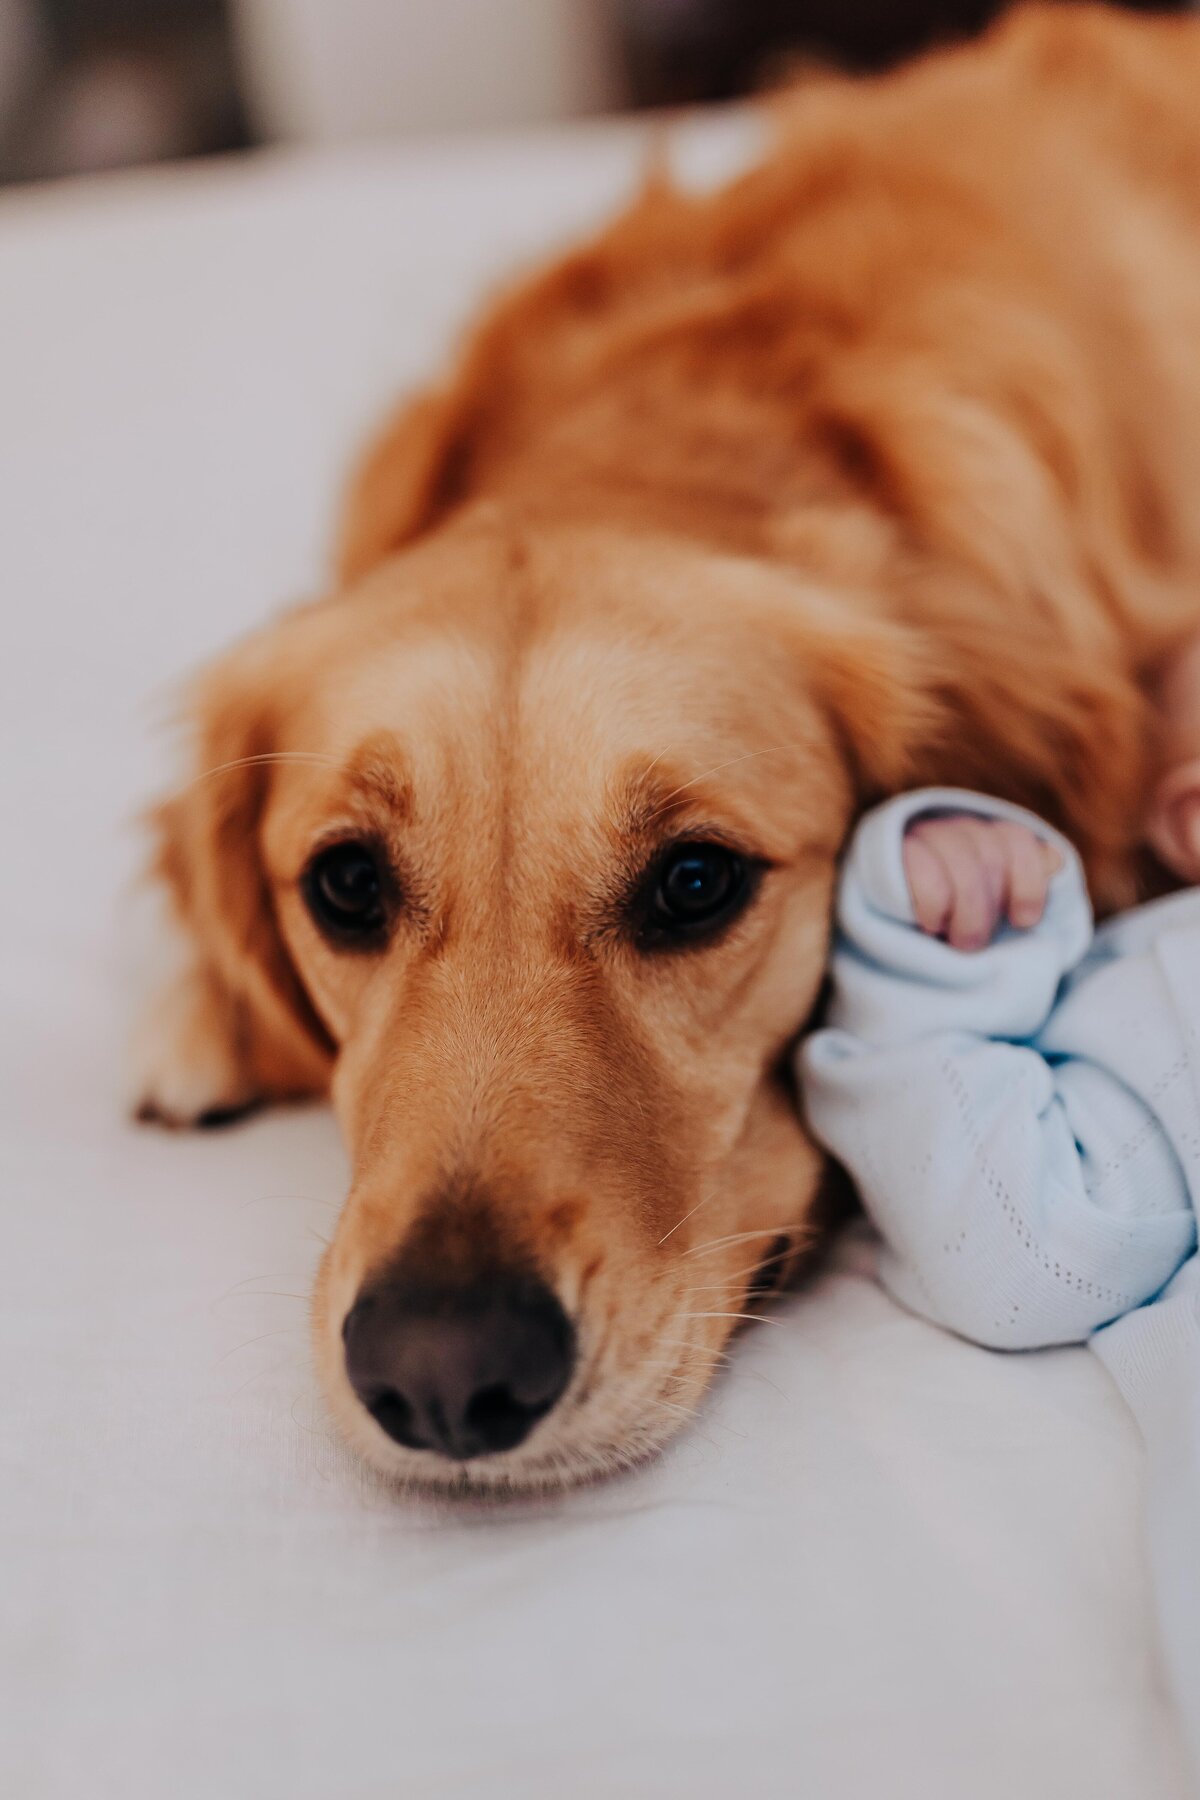 Nashville newborn photographer captures baby leaning against dog